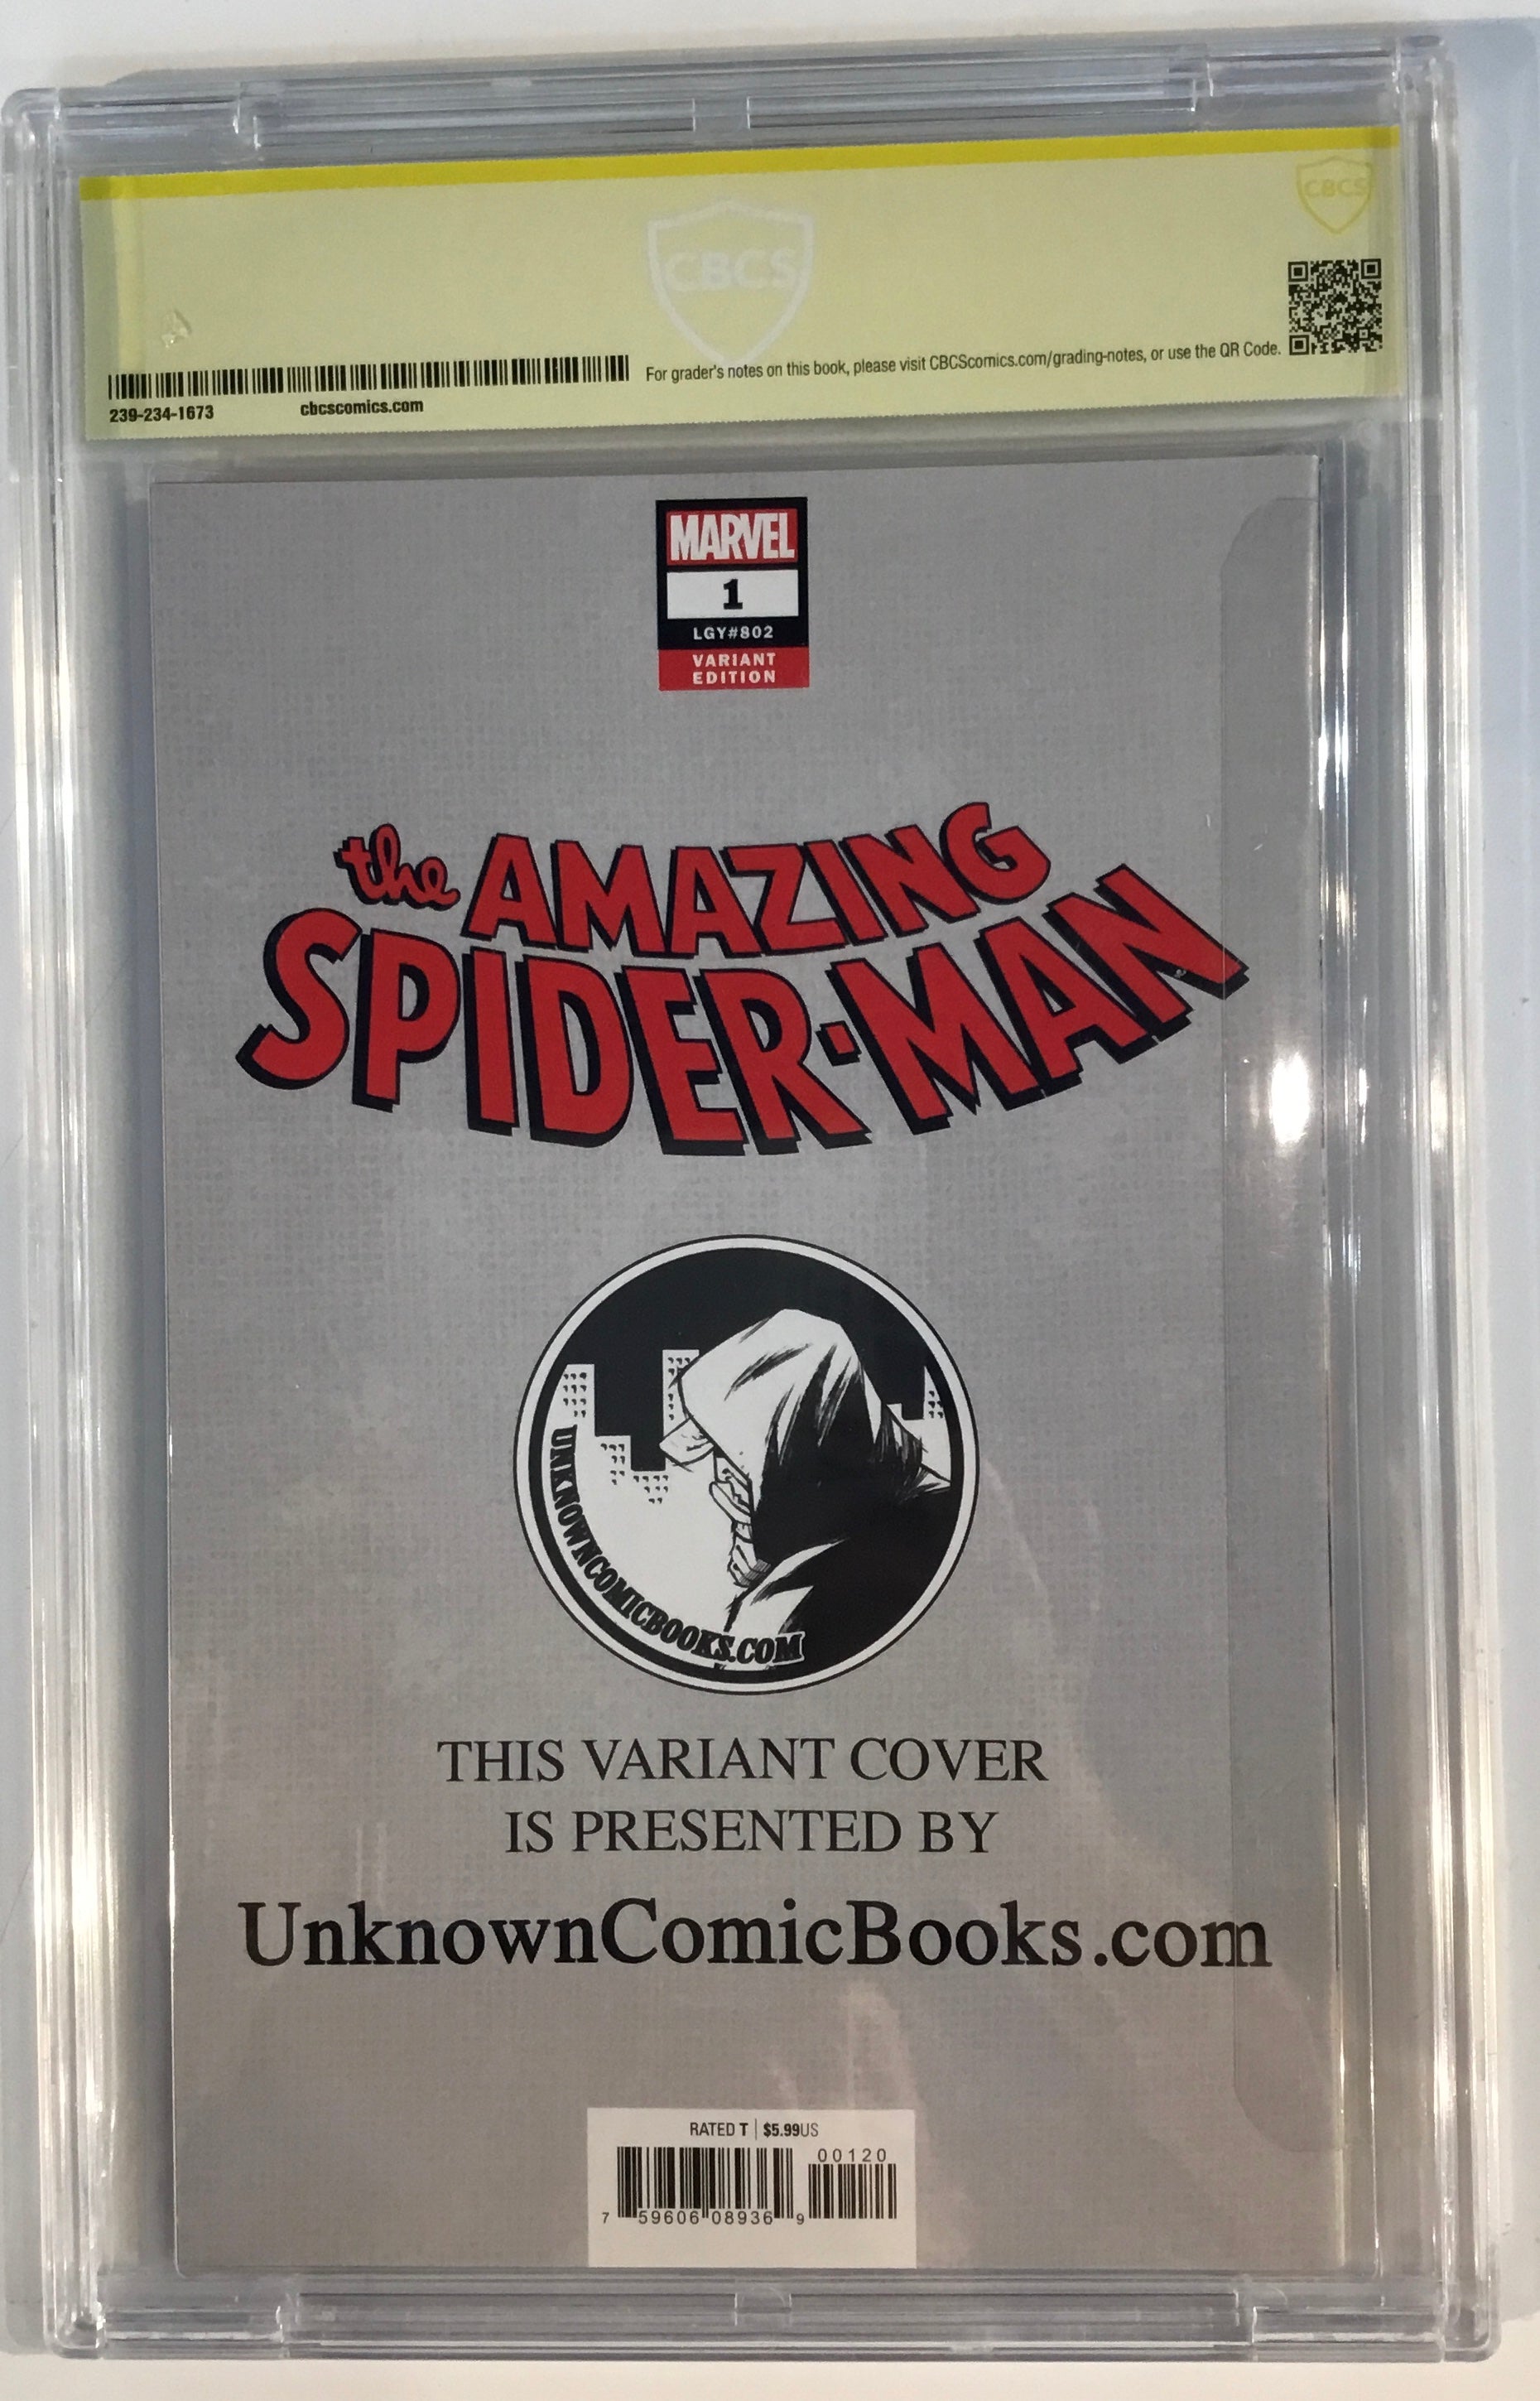 Amazing Spider-Man #1 (2018) - Marvel 2018 - CBCS 9.8 - Autographed Phillip Tan cover